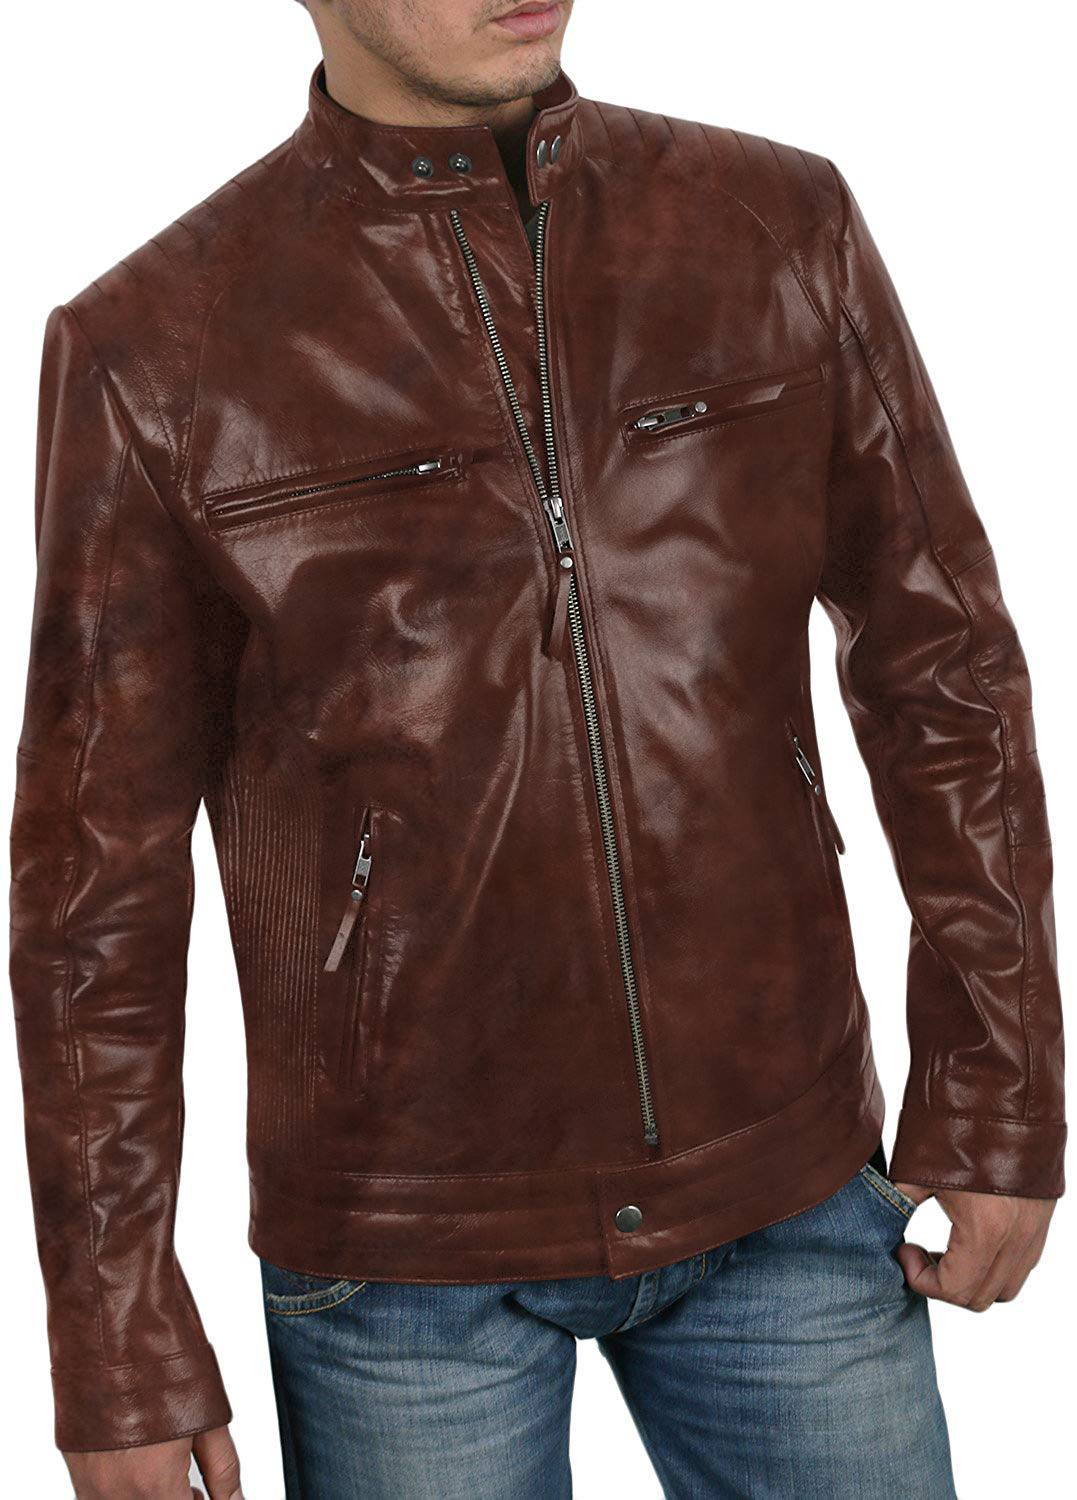 Leather Jackets Hub Mens Genuine Lambskin Leather Jacket (Black, Fencing Jacket) - 1501309